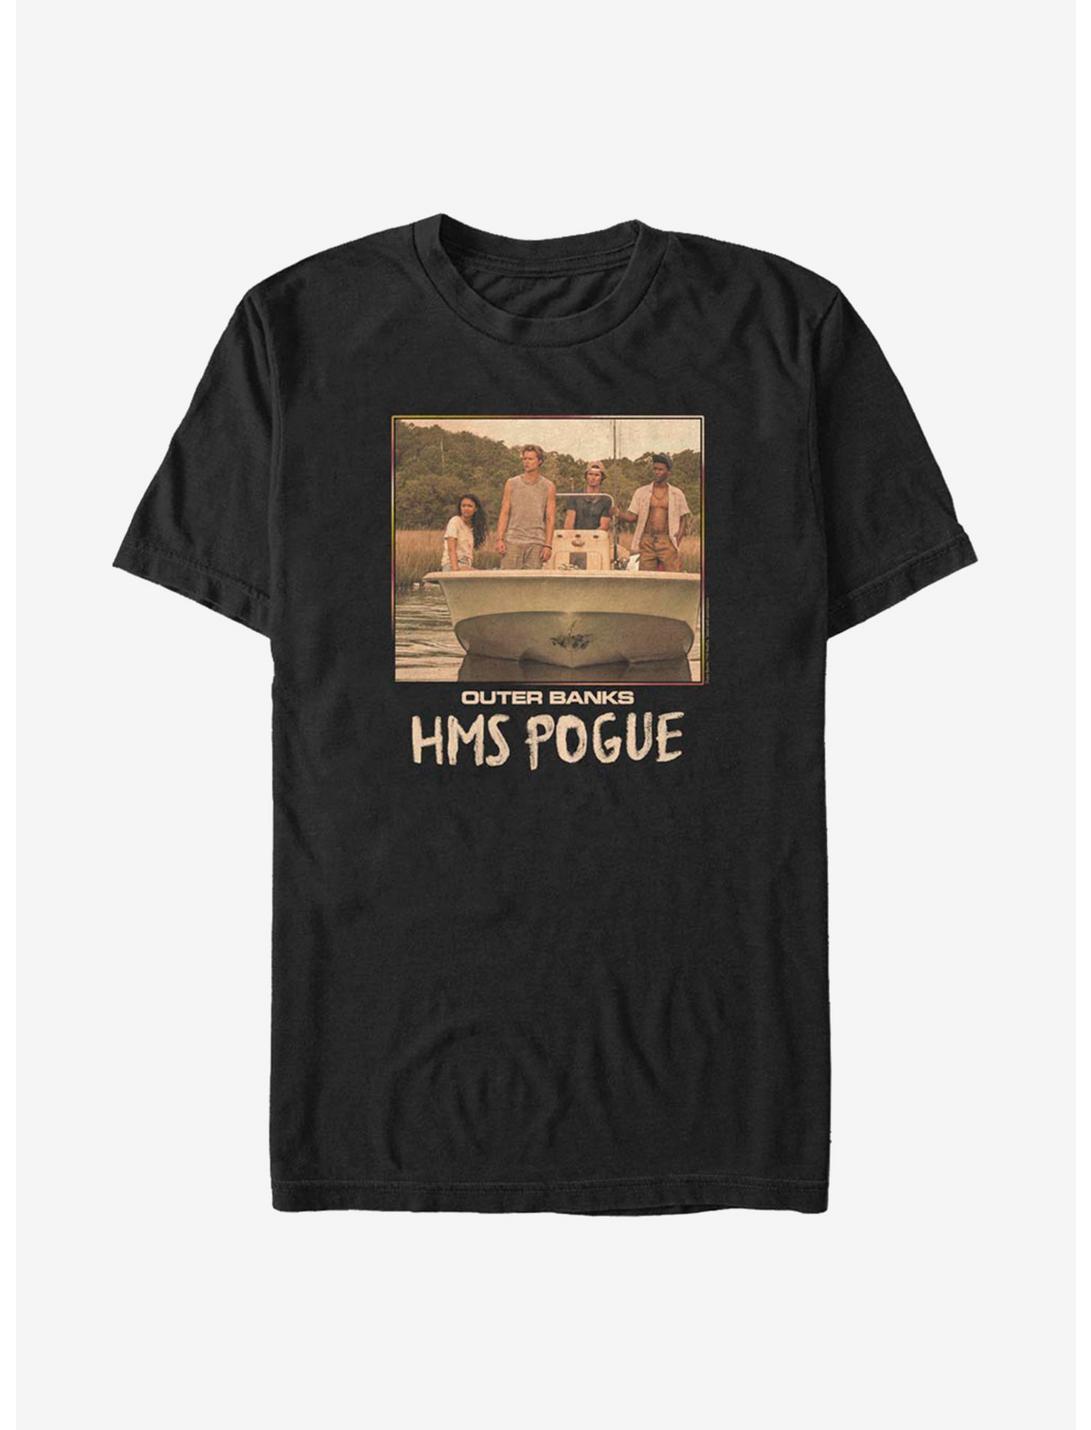 Outer Banks HMS Pogue Square T-Shirt, BLACK, hi-res